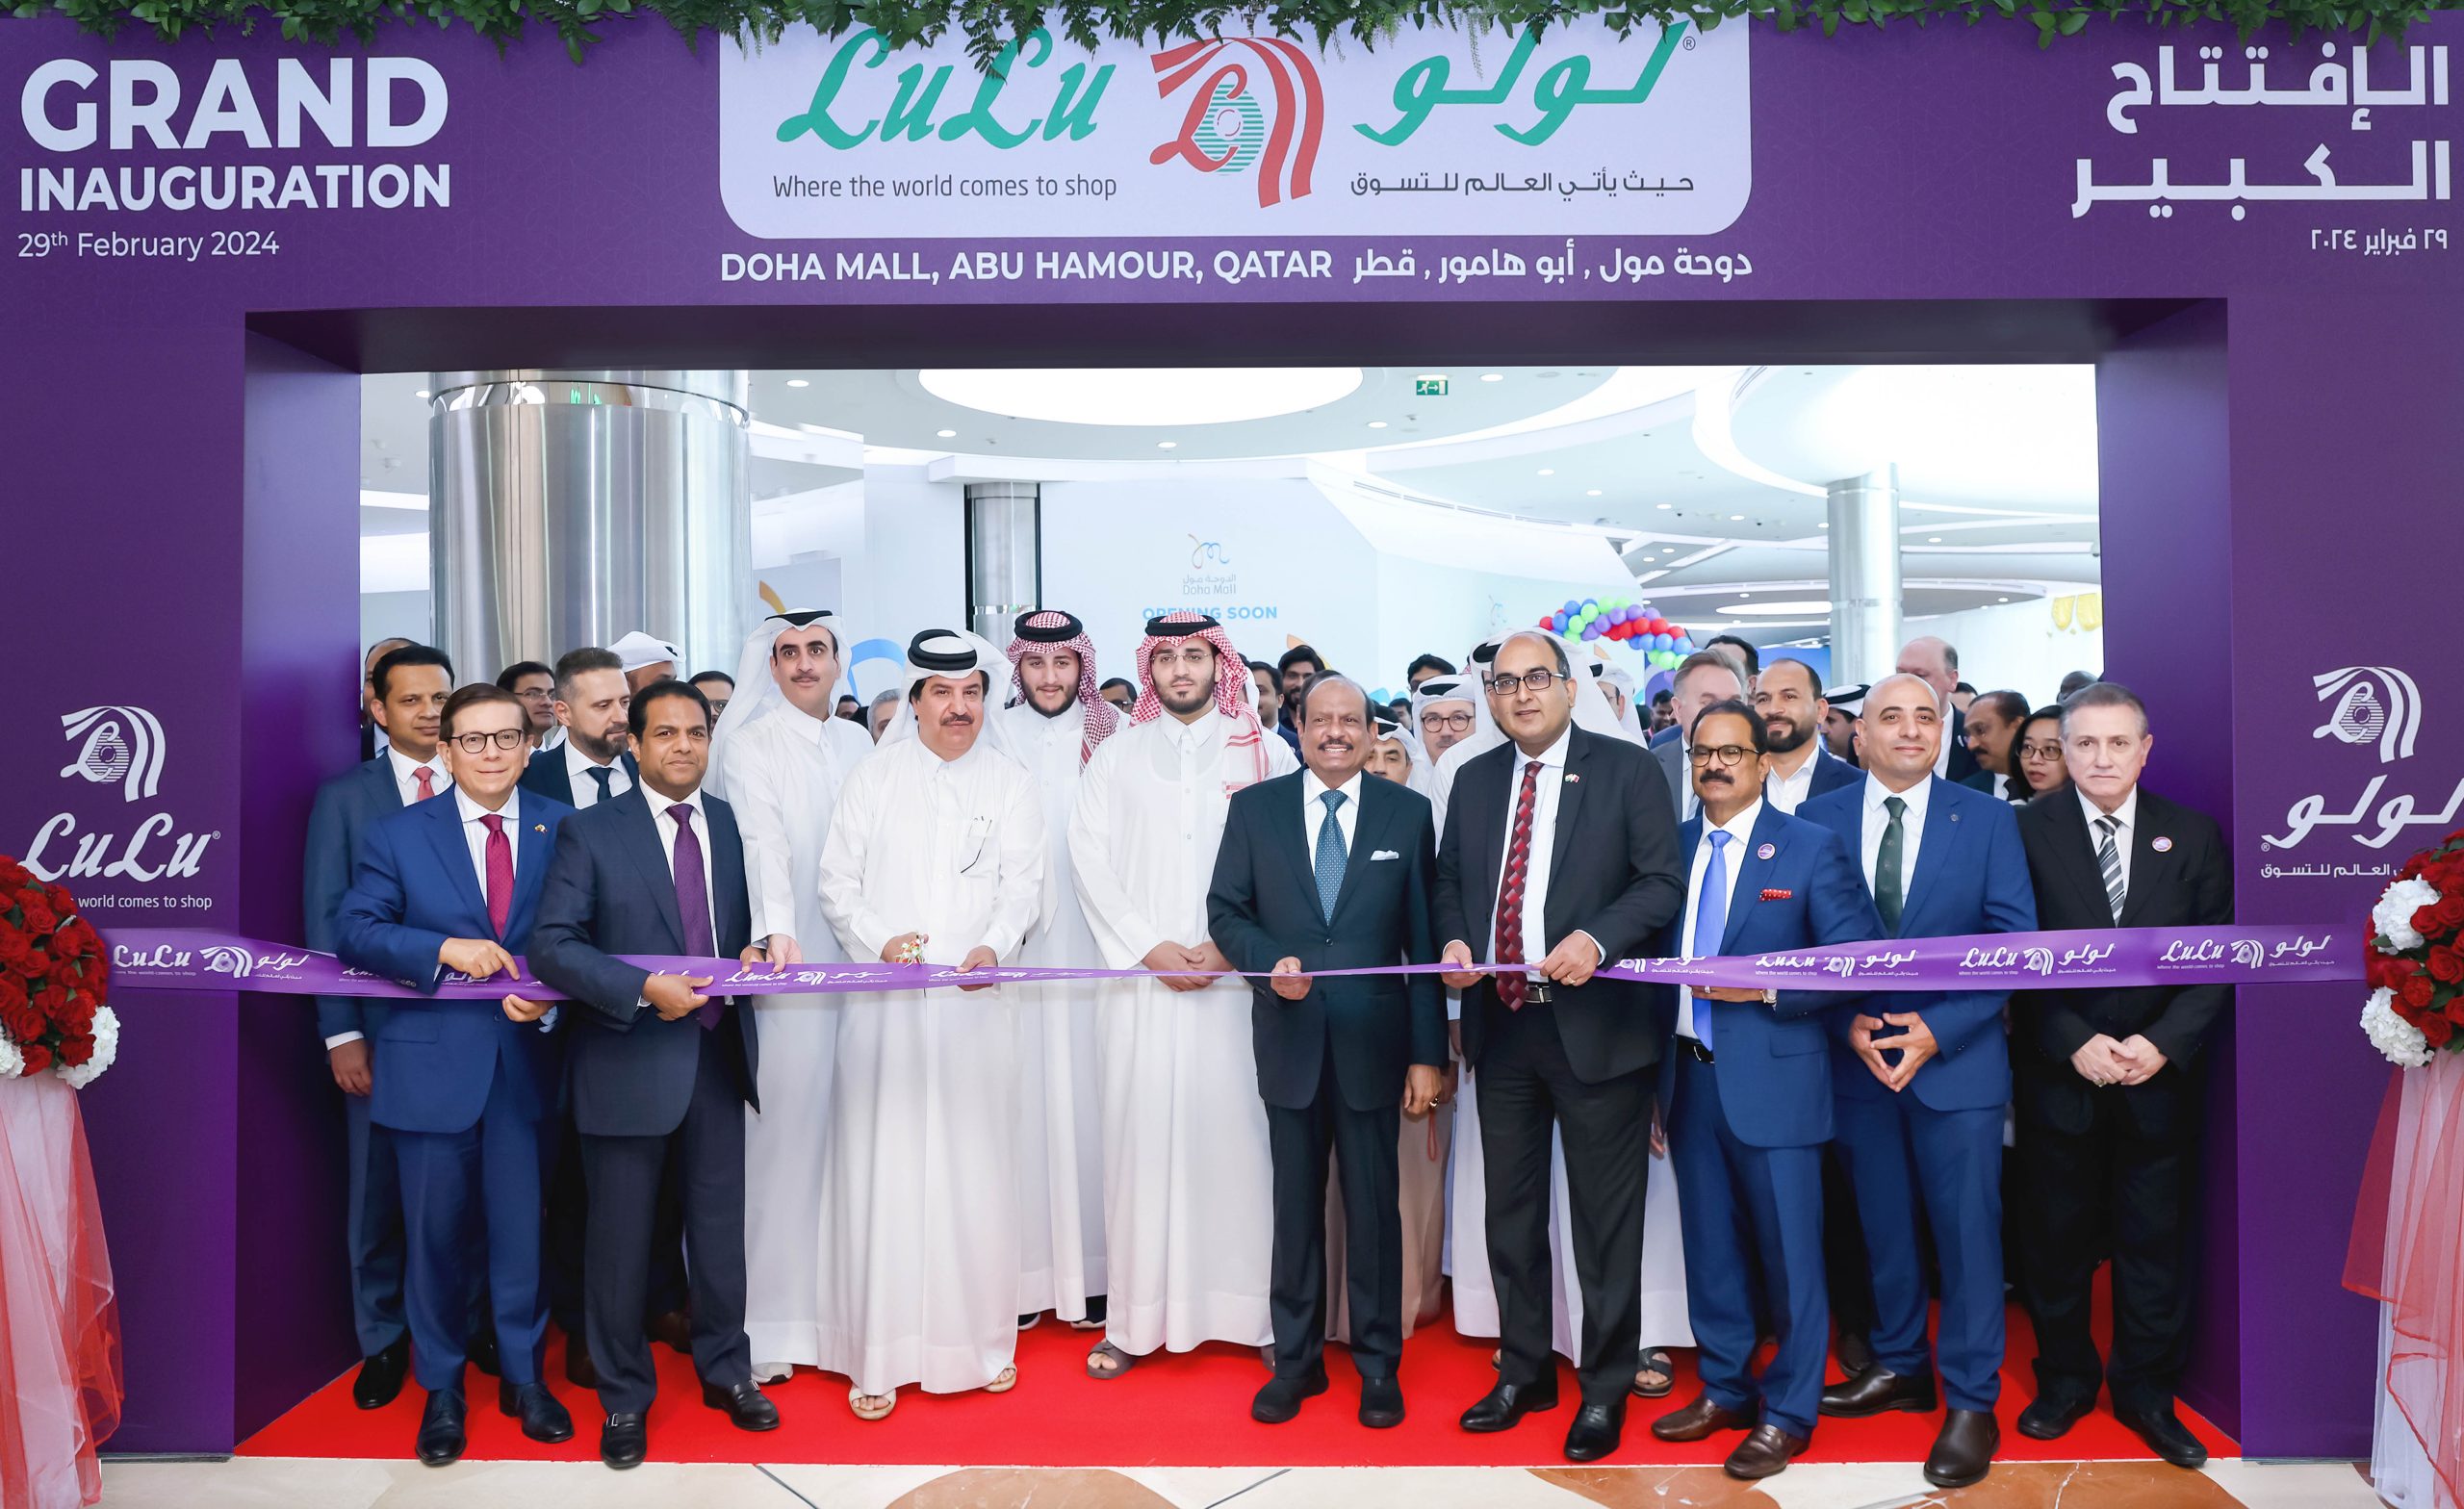 LuLu Group inaugurates 23rd Hypermarket in Qatar at Doha Mall